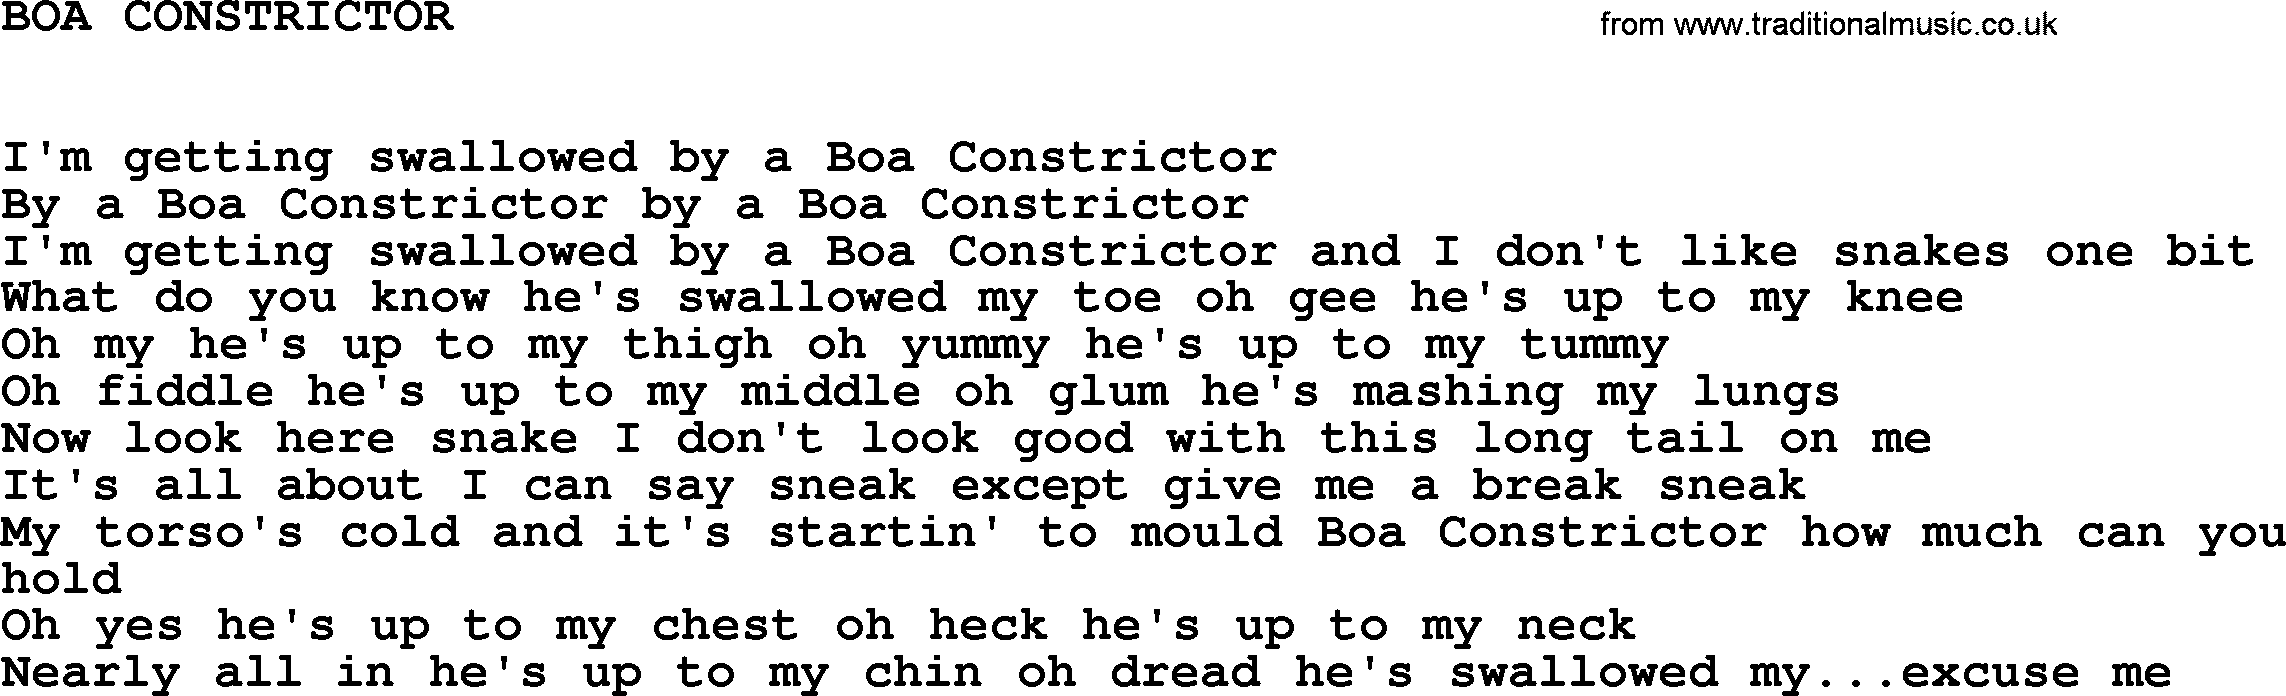 Johnny Cash song Boa Constrictor.txt lyrics